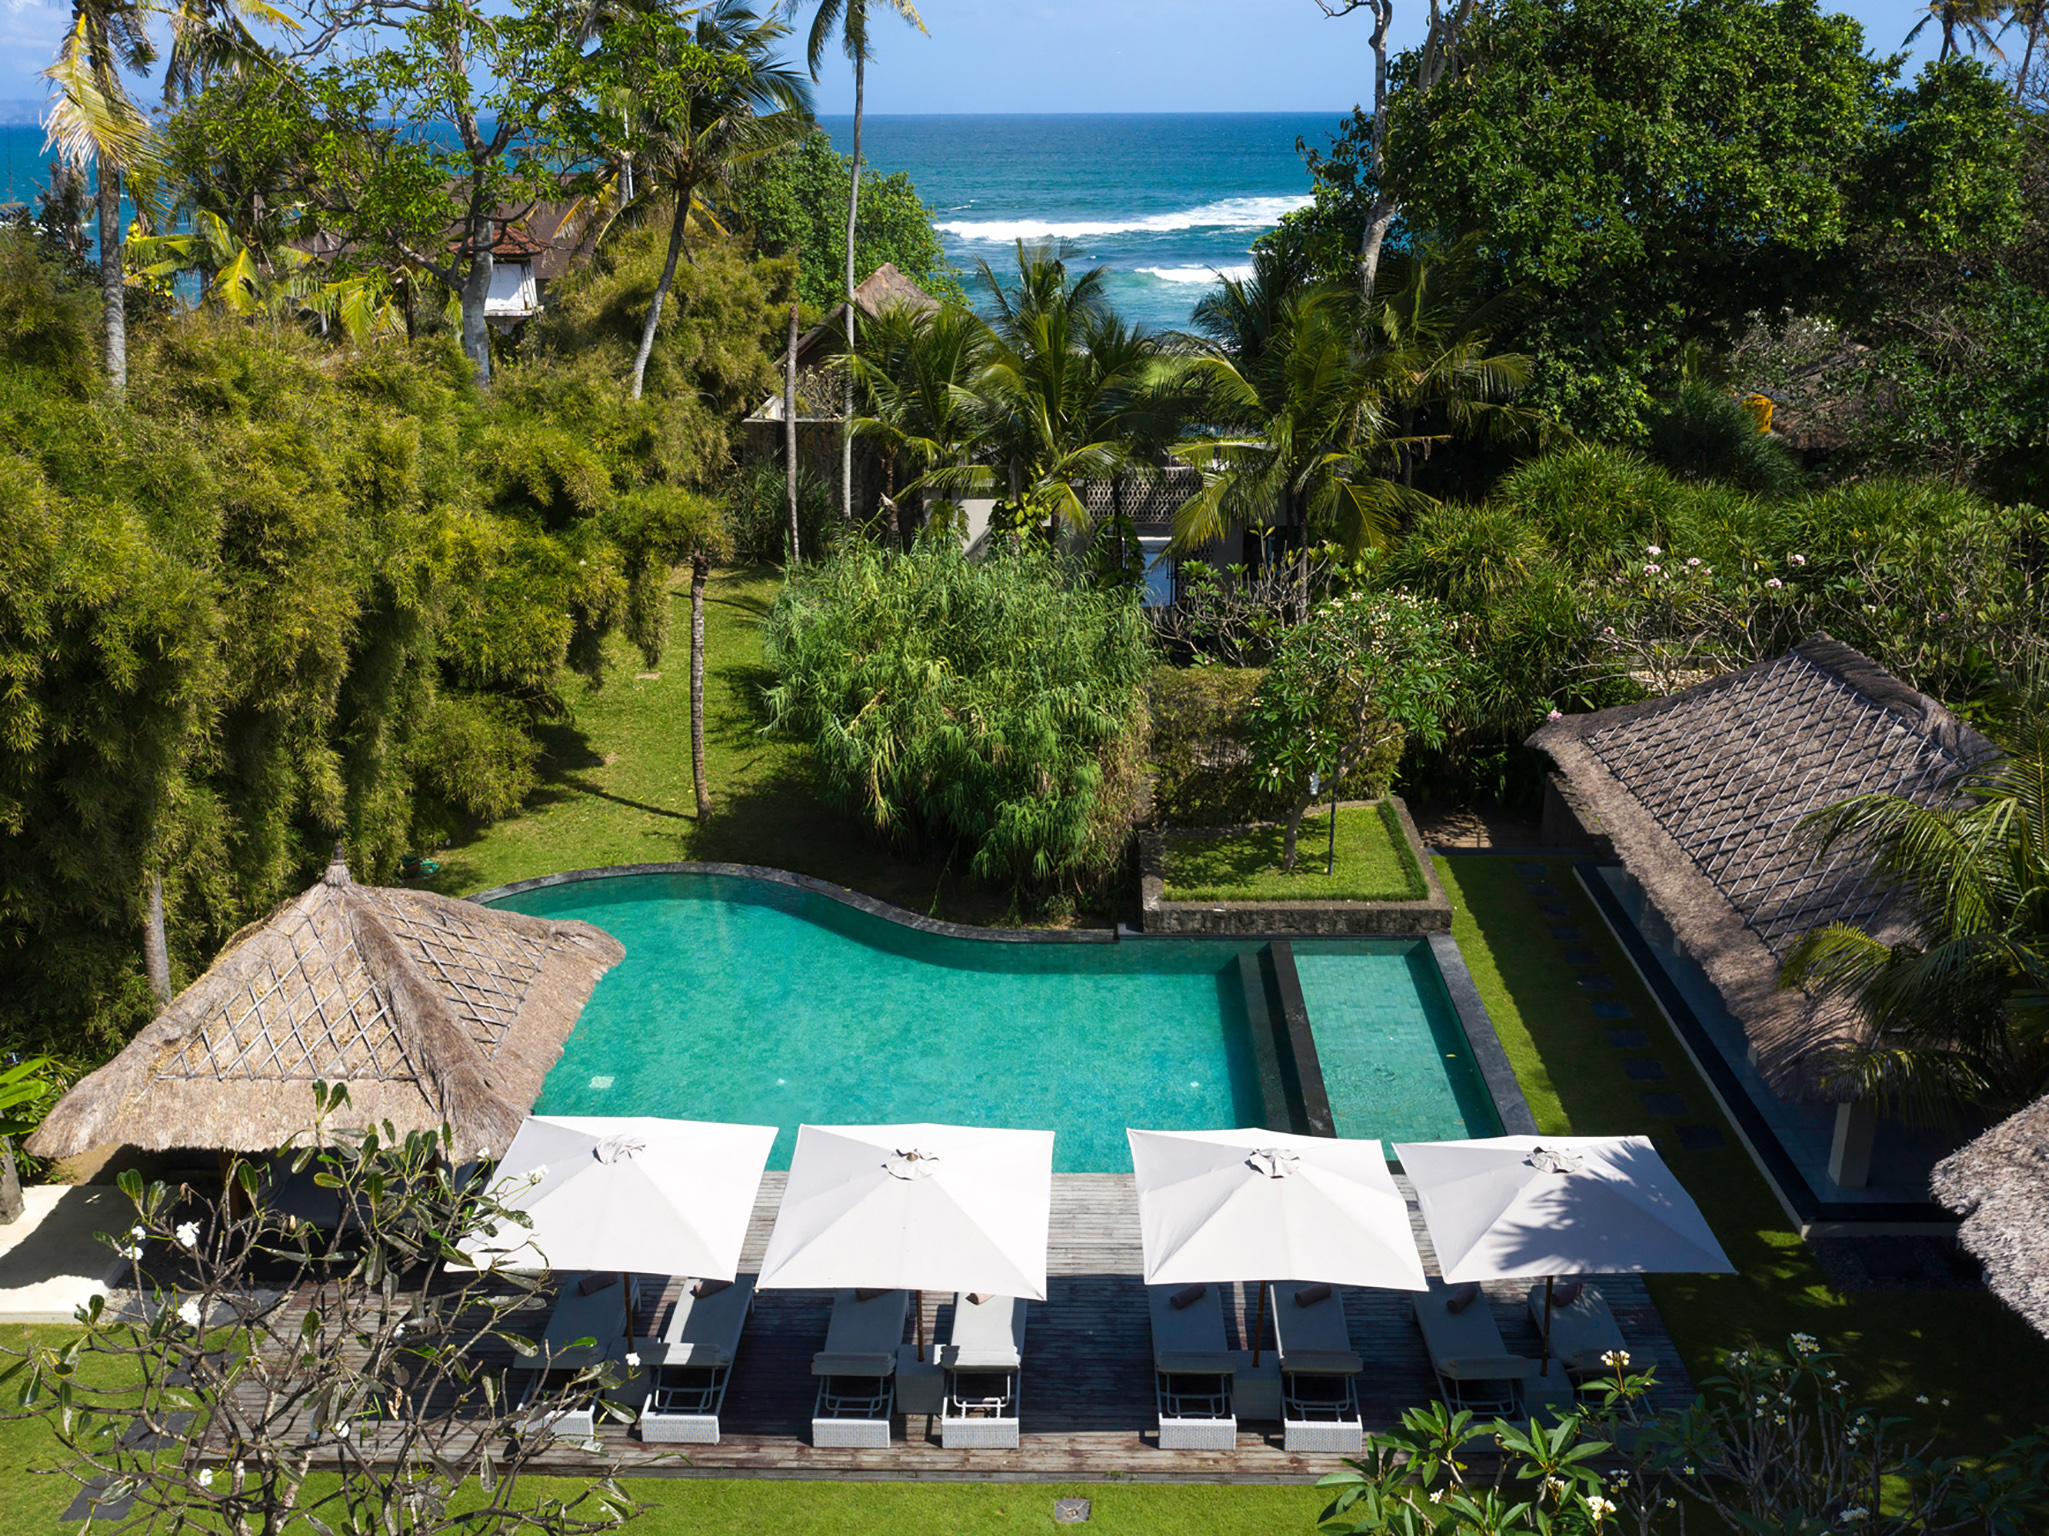 Seseh Beach Villa II - Tropical setting - Seseh Beach Villa II, Seseh-Tanah Lot, Bali